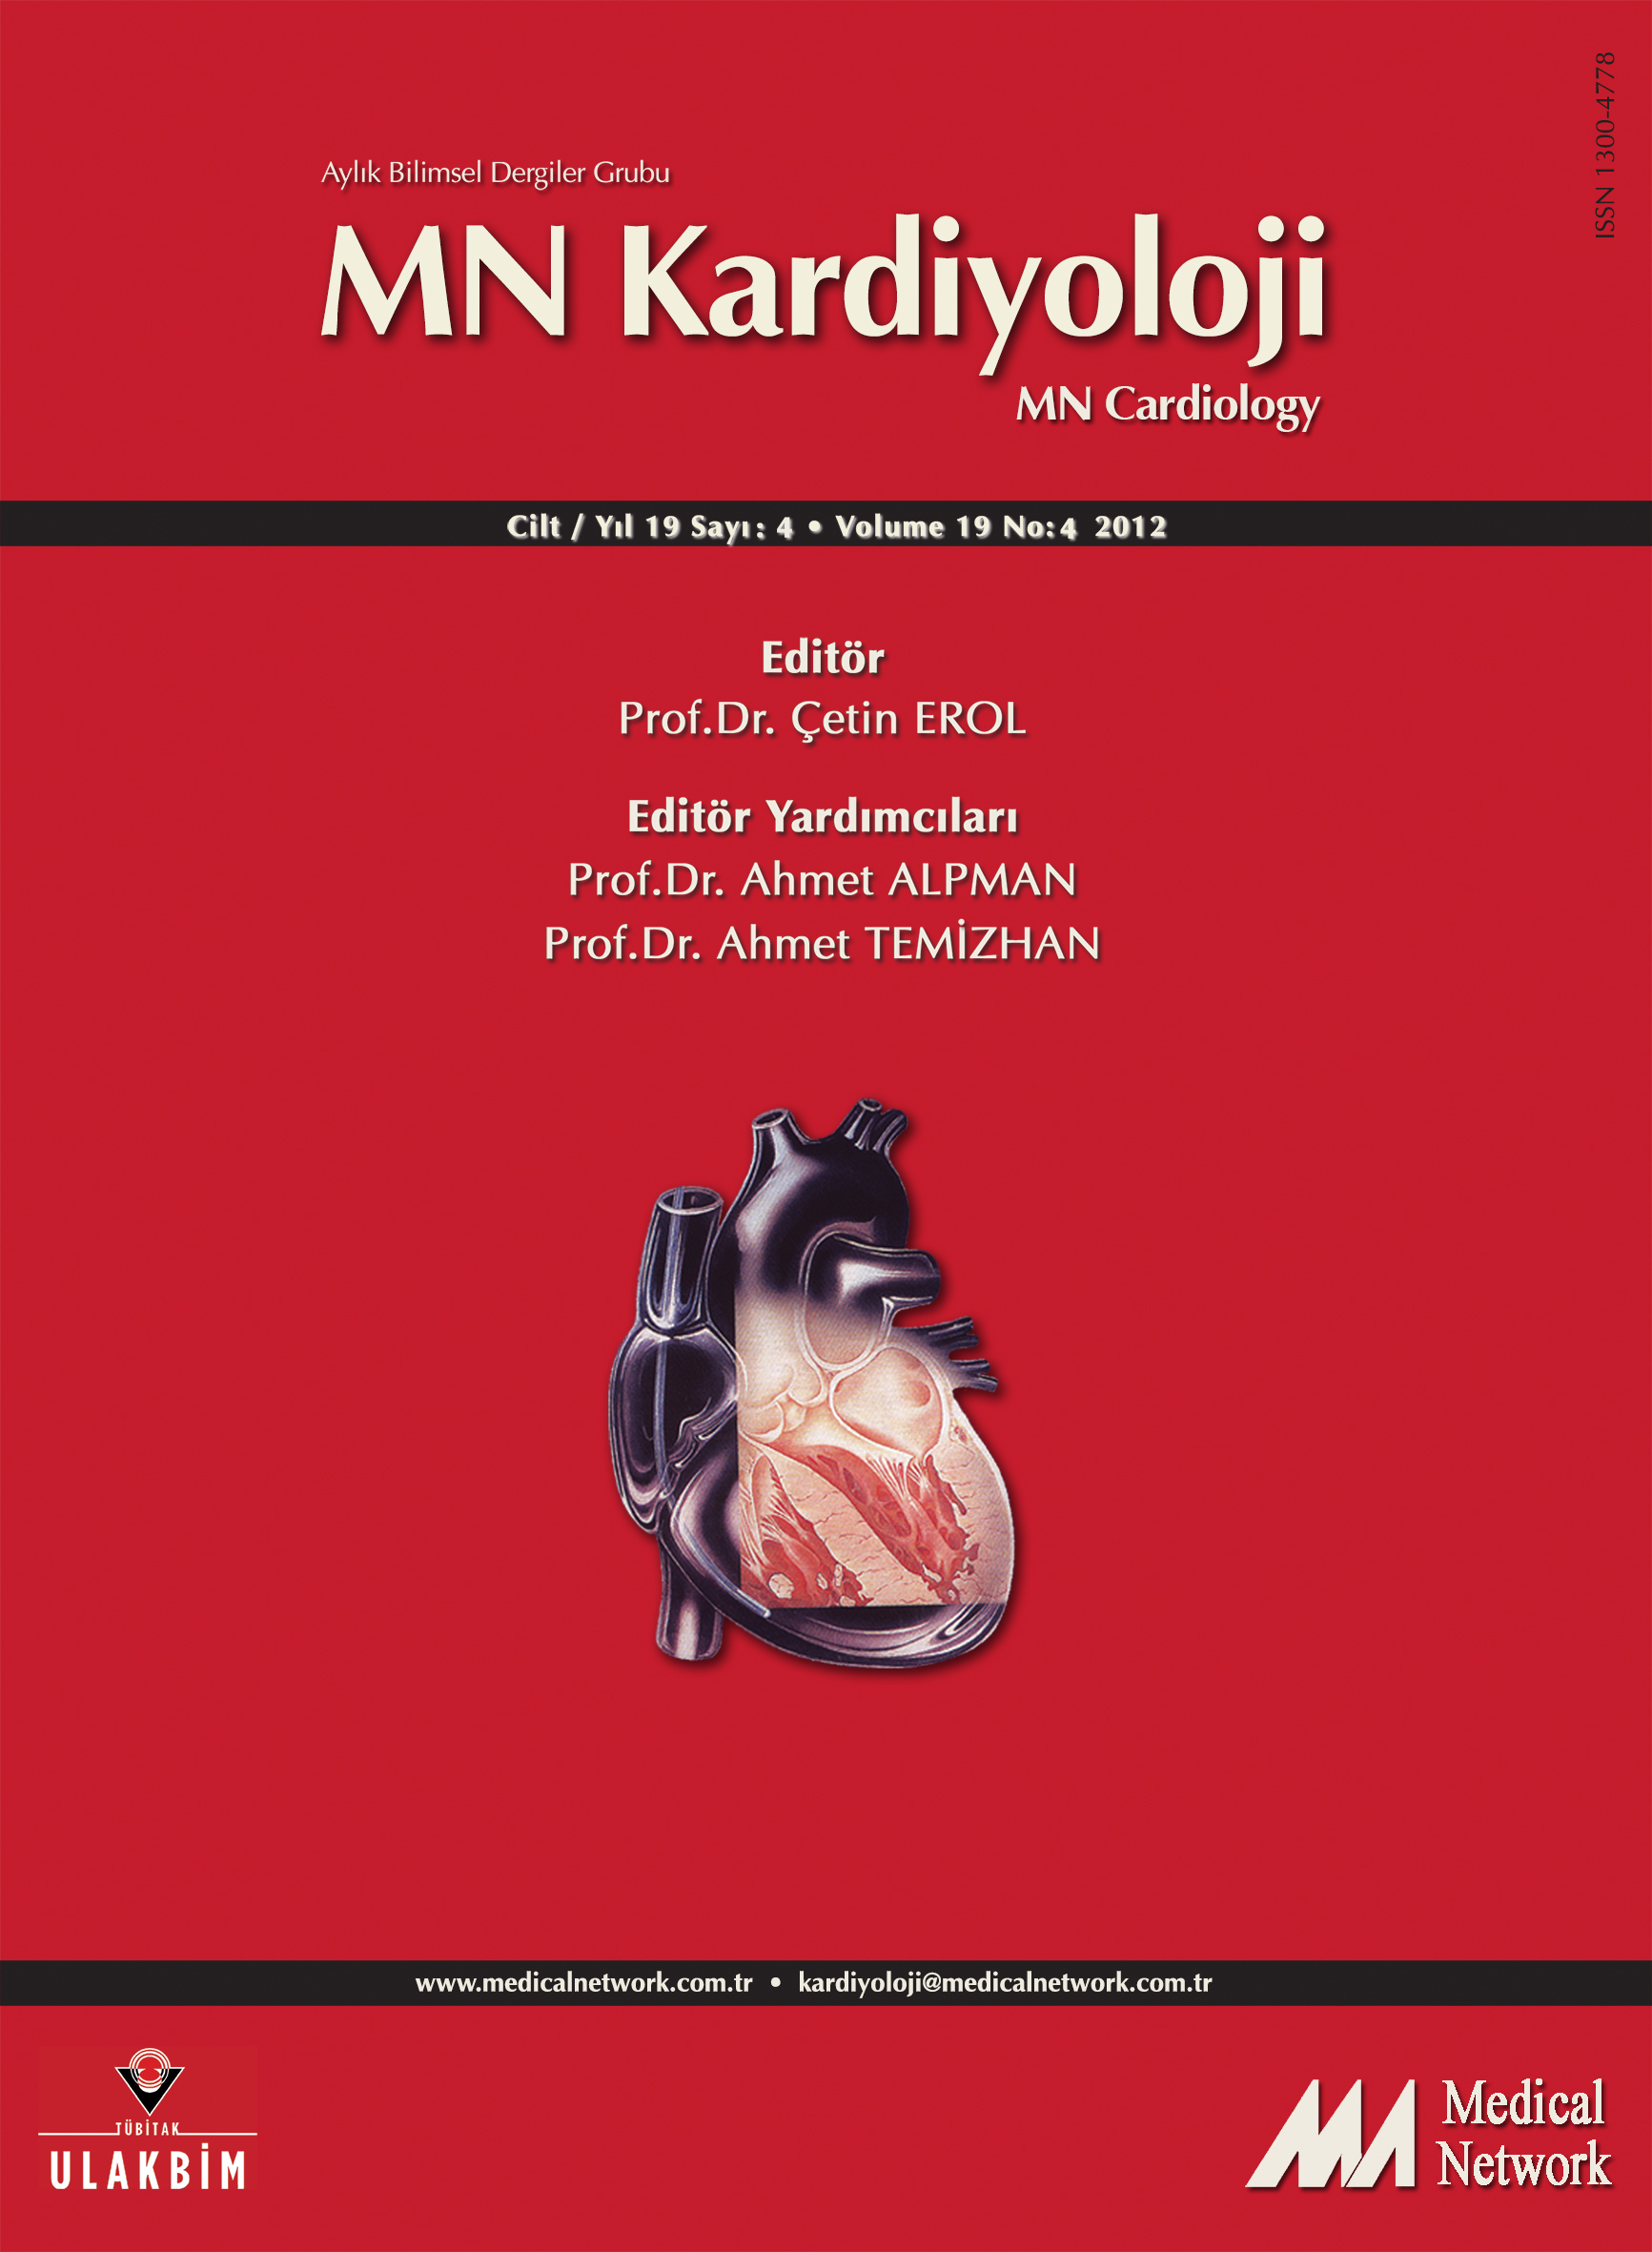 <p>MN Kardiyoloji Cilt: 19 Sayı: 4 2012 (MN Cardiology Volume: 19 No: 4 2012)</p>